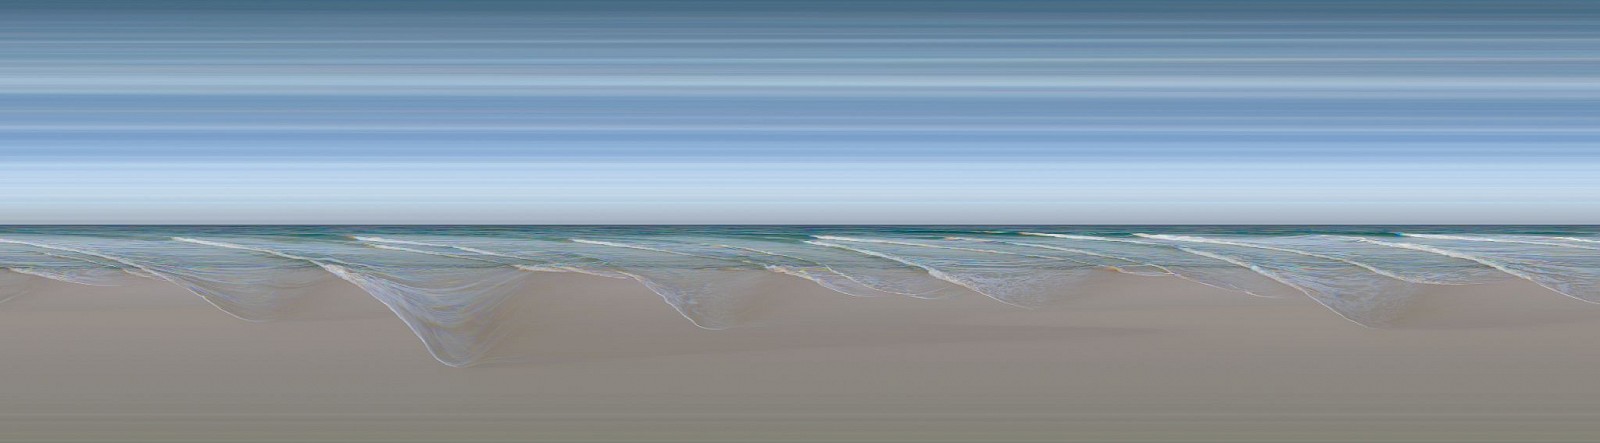 Jay Mark Johnson, COZUMEL WAVES #18, 2009 Cozumel MX
archival pigment on paper, mounted on aluminum, 40 x 144 in. (101.6 x 365.8 cm)